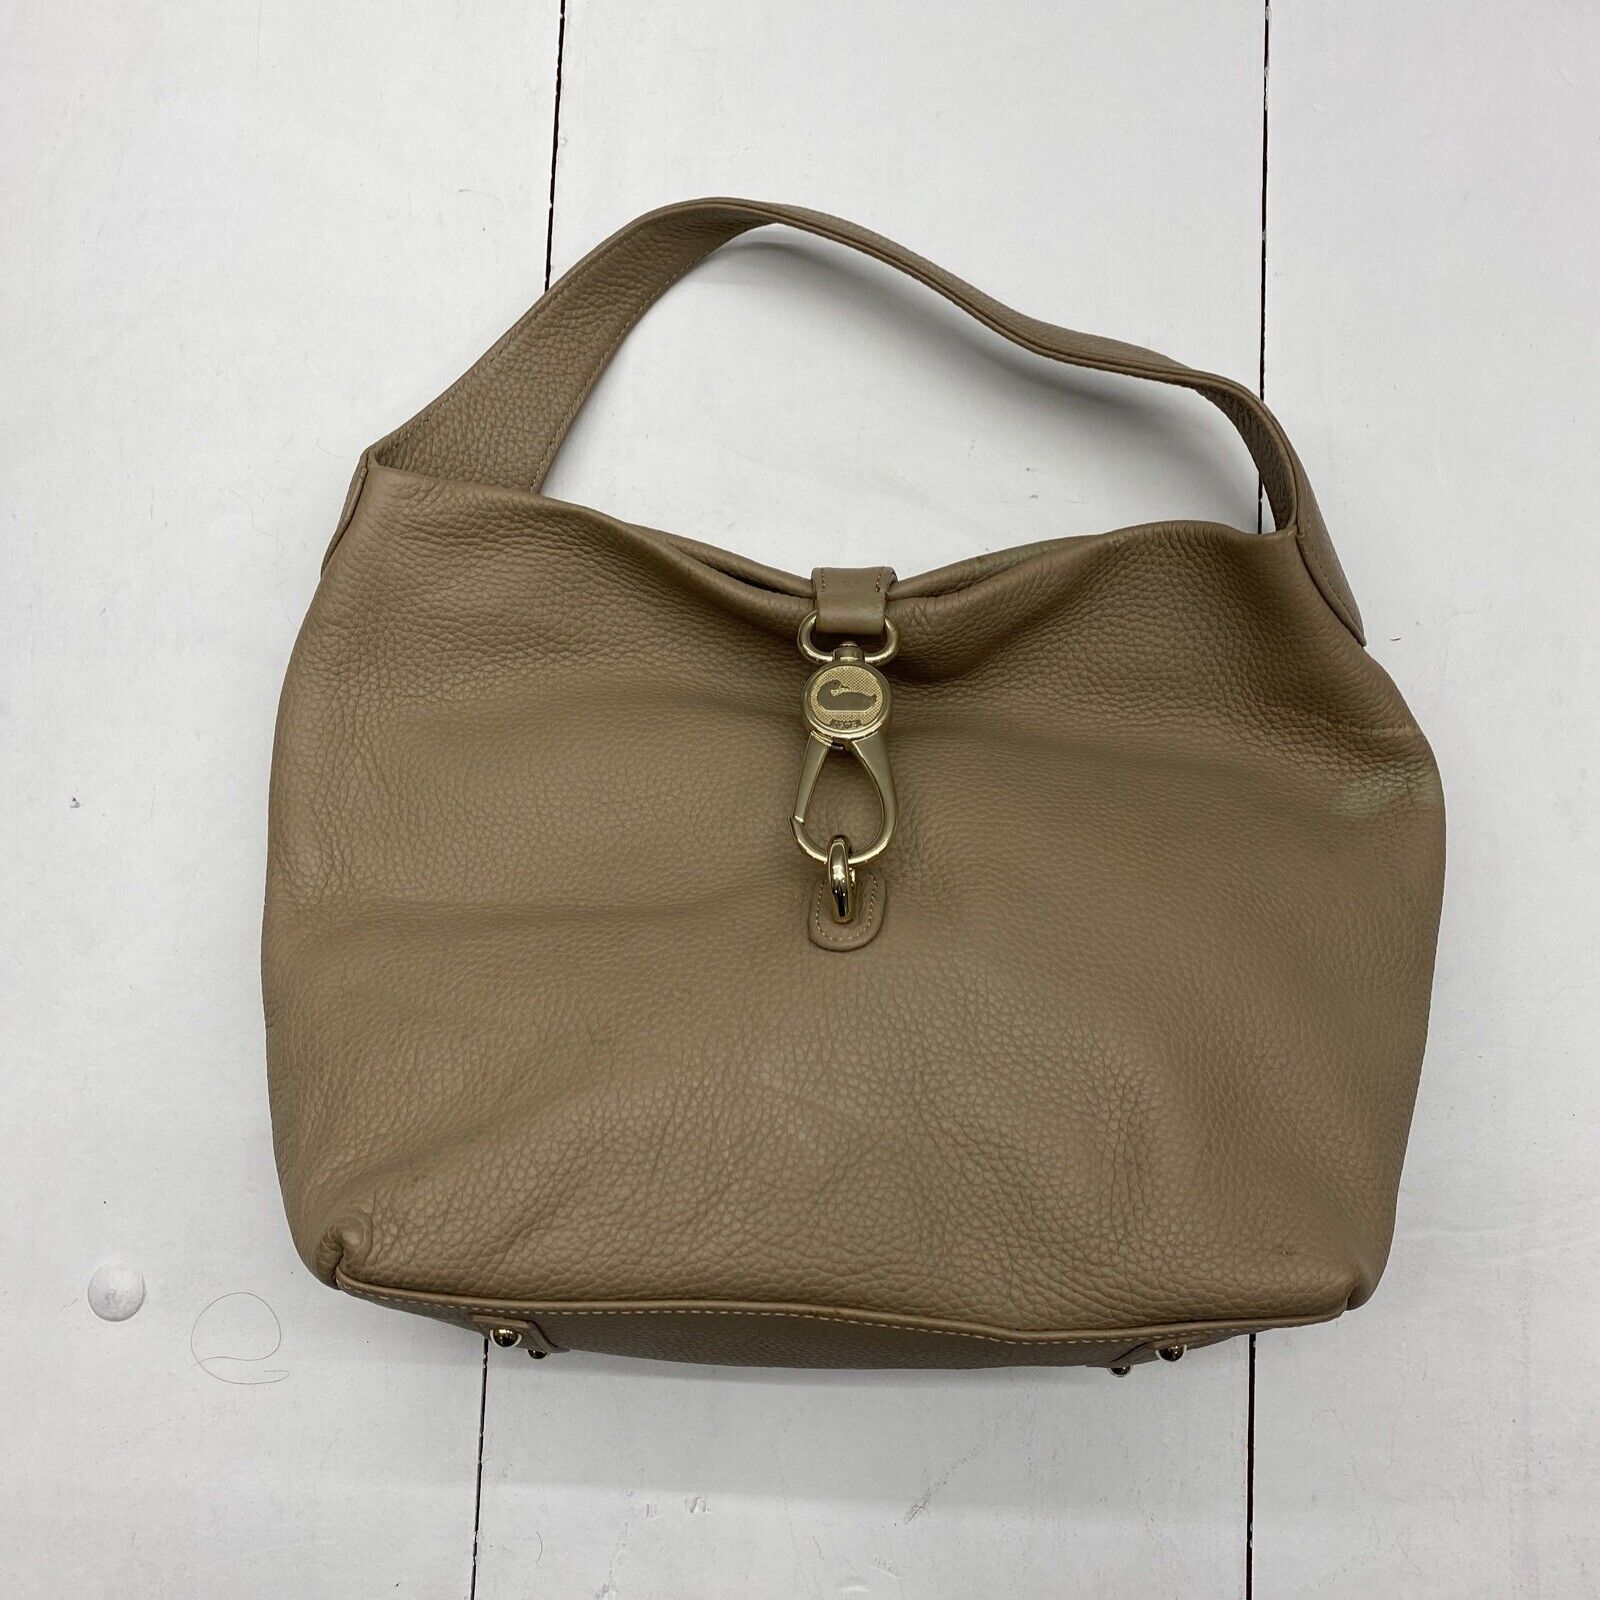 Dooney & Bourke Handbag, Pebble Grain Small Logo Lock Sac Shoulder Bag